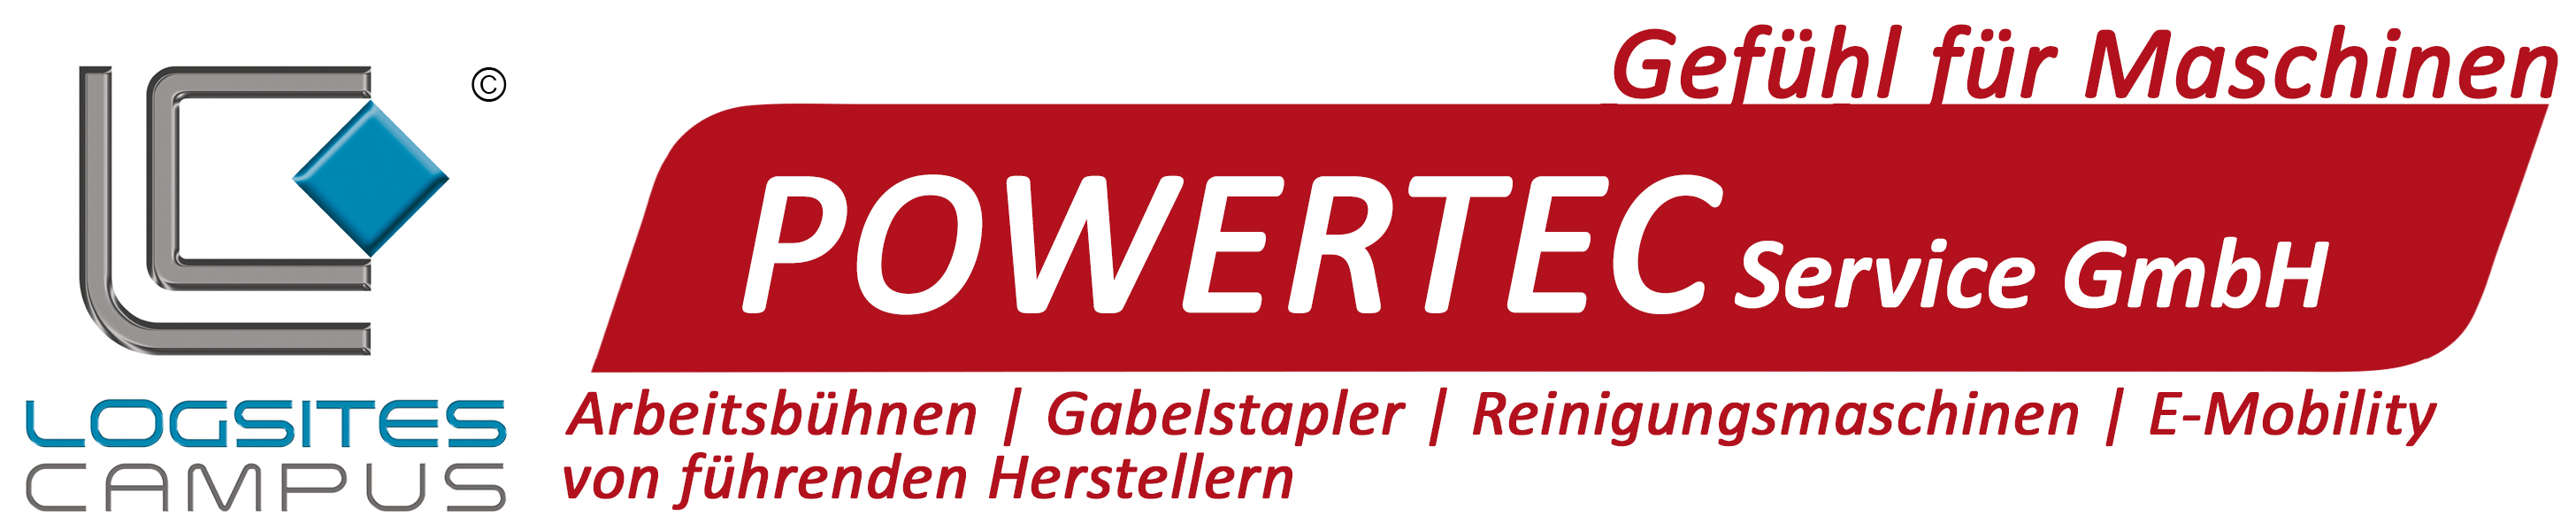 Powertec Service GmbH Online Shop-Logo